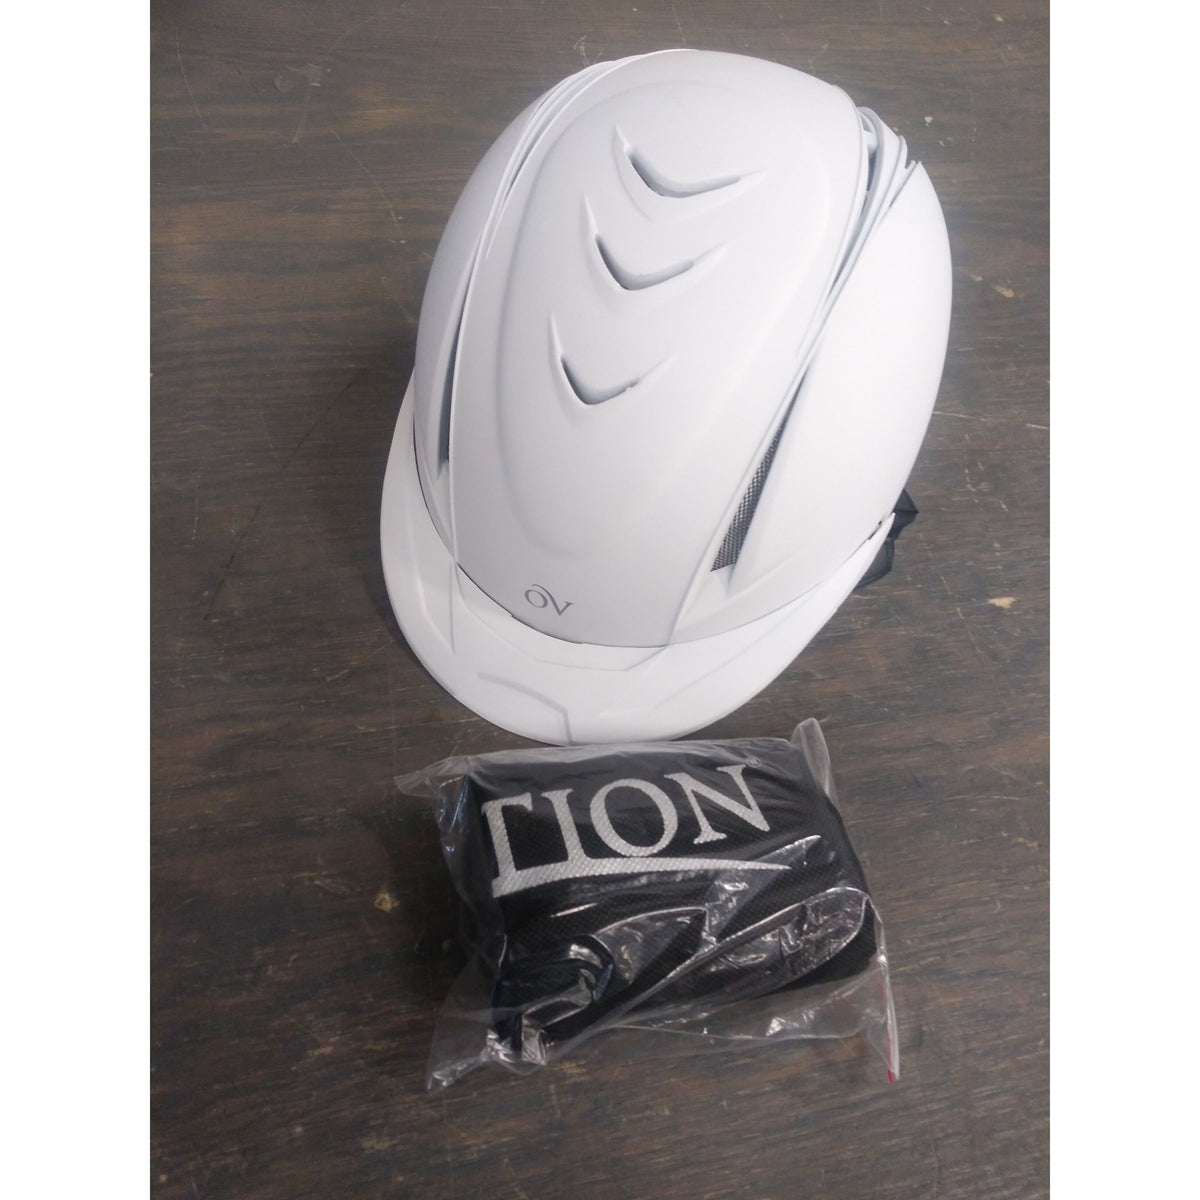 Ovation Deluxe Schooler Helmet - White - Medium/Large - Used - Acceptable